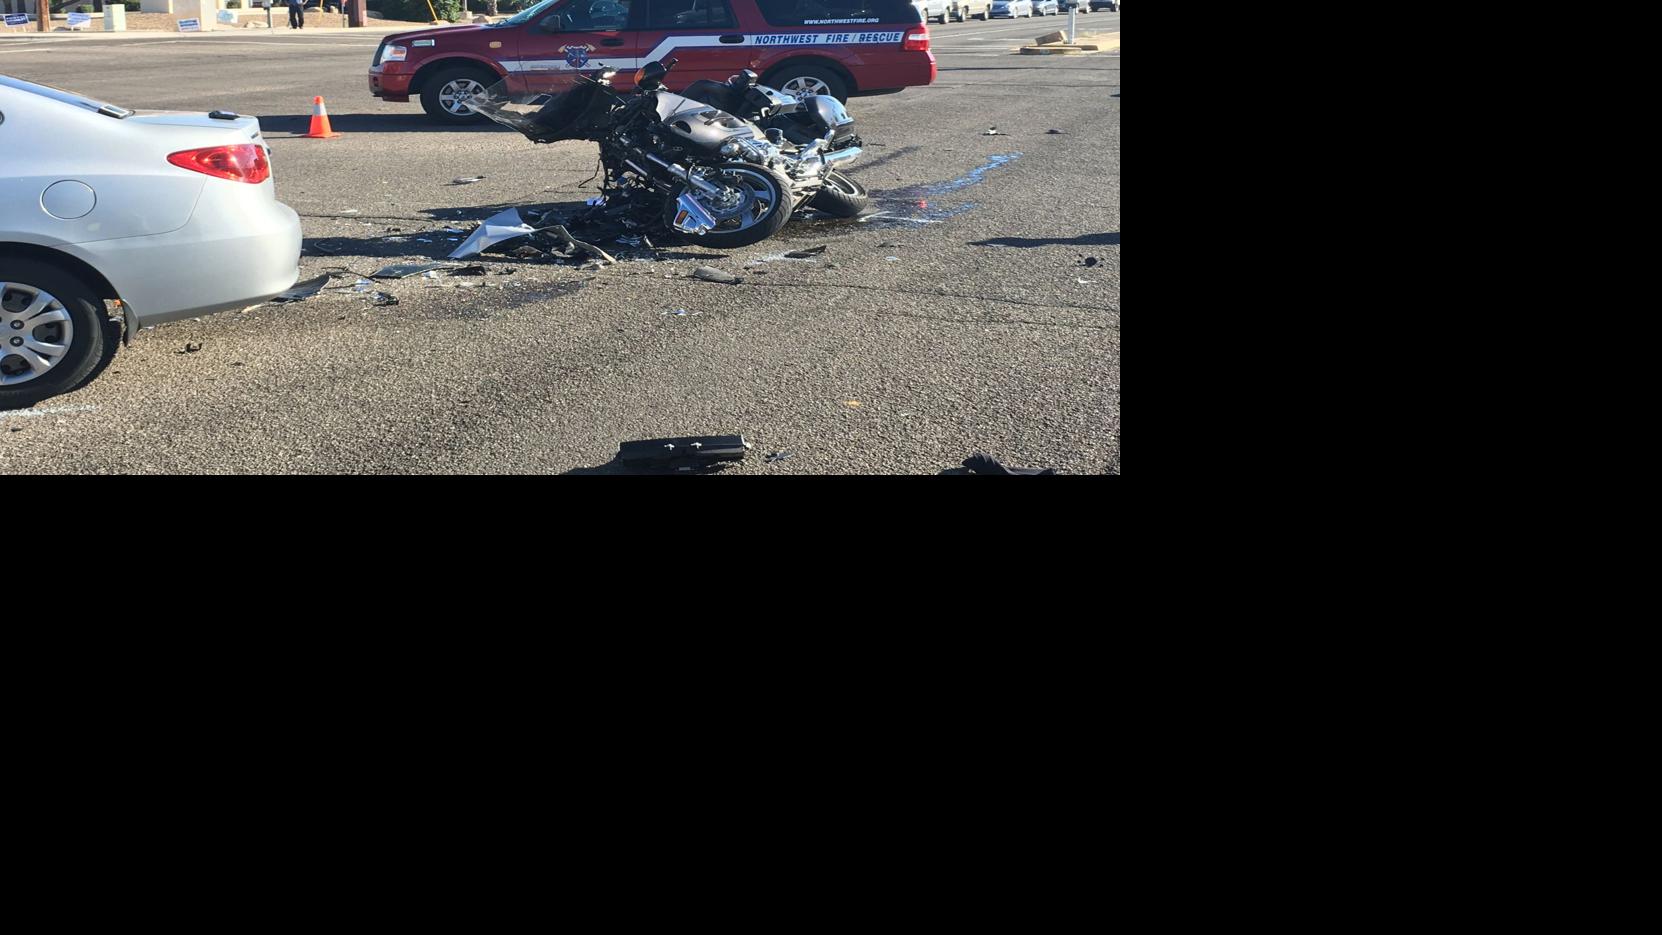 Man seriously injured in northwest Tucson motorcycle crash Local news